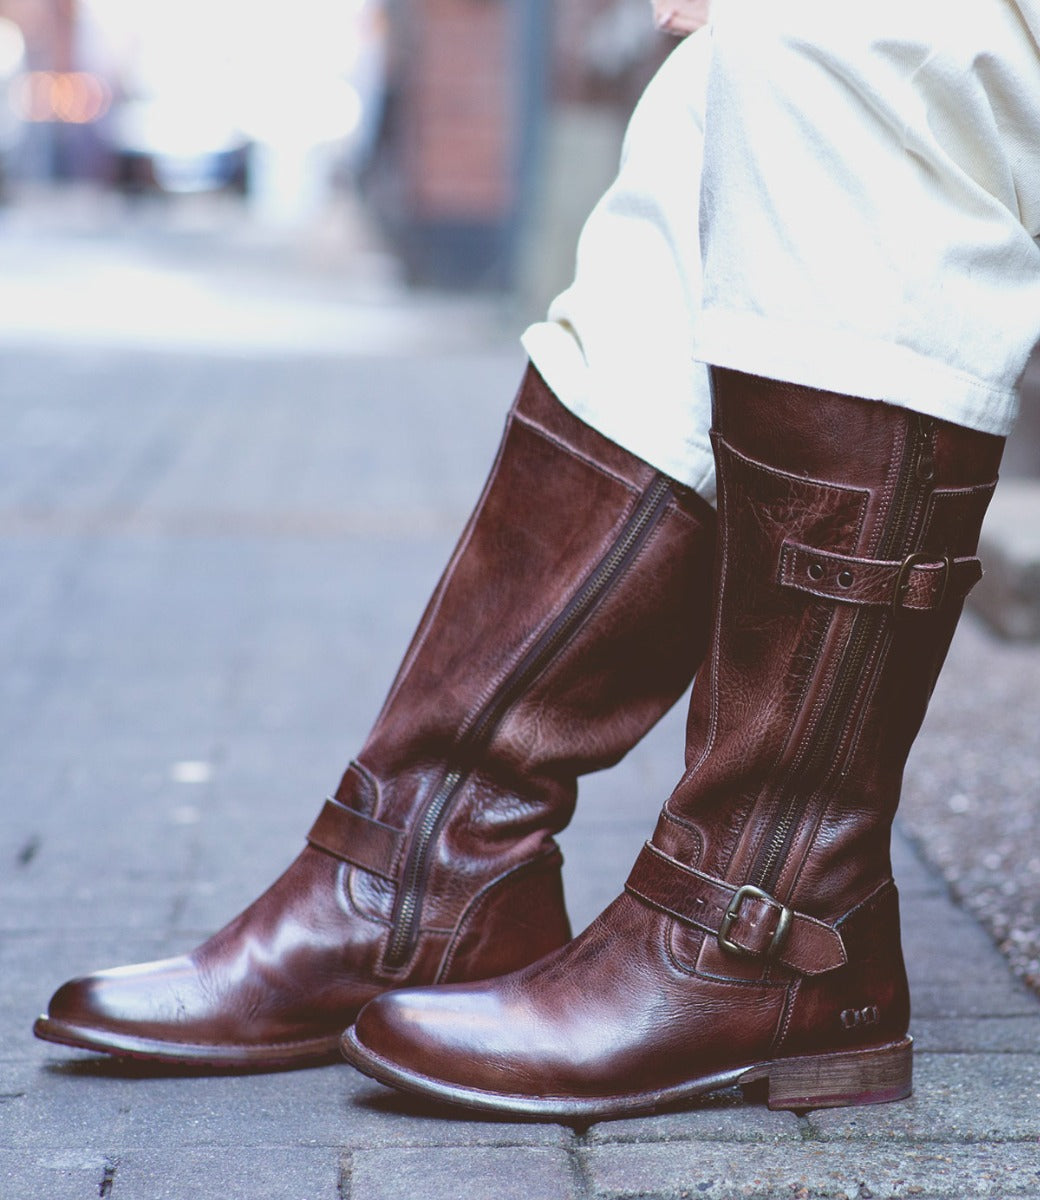 A person wearing Bed Stu Gogo Lug Wide Calf boots on a sidewalk.